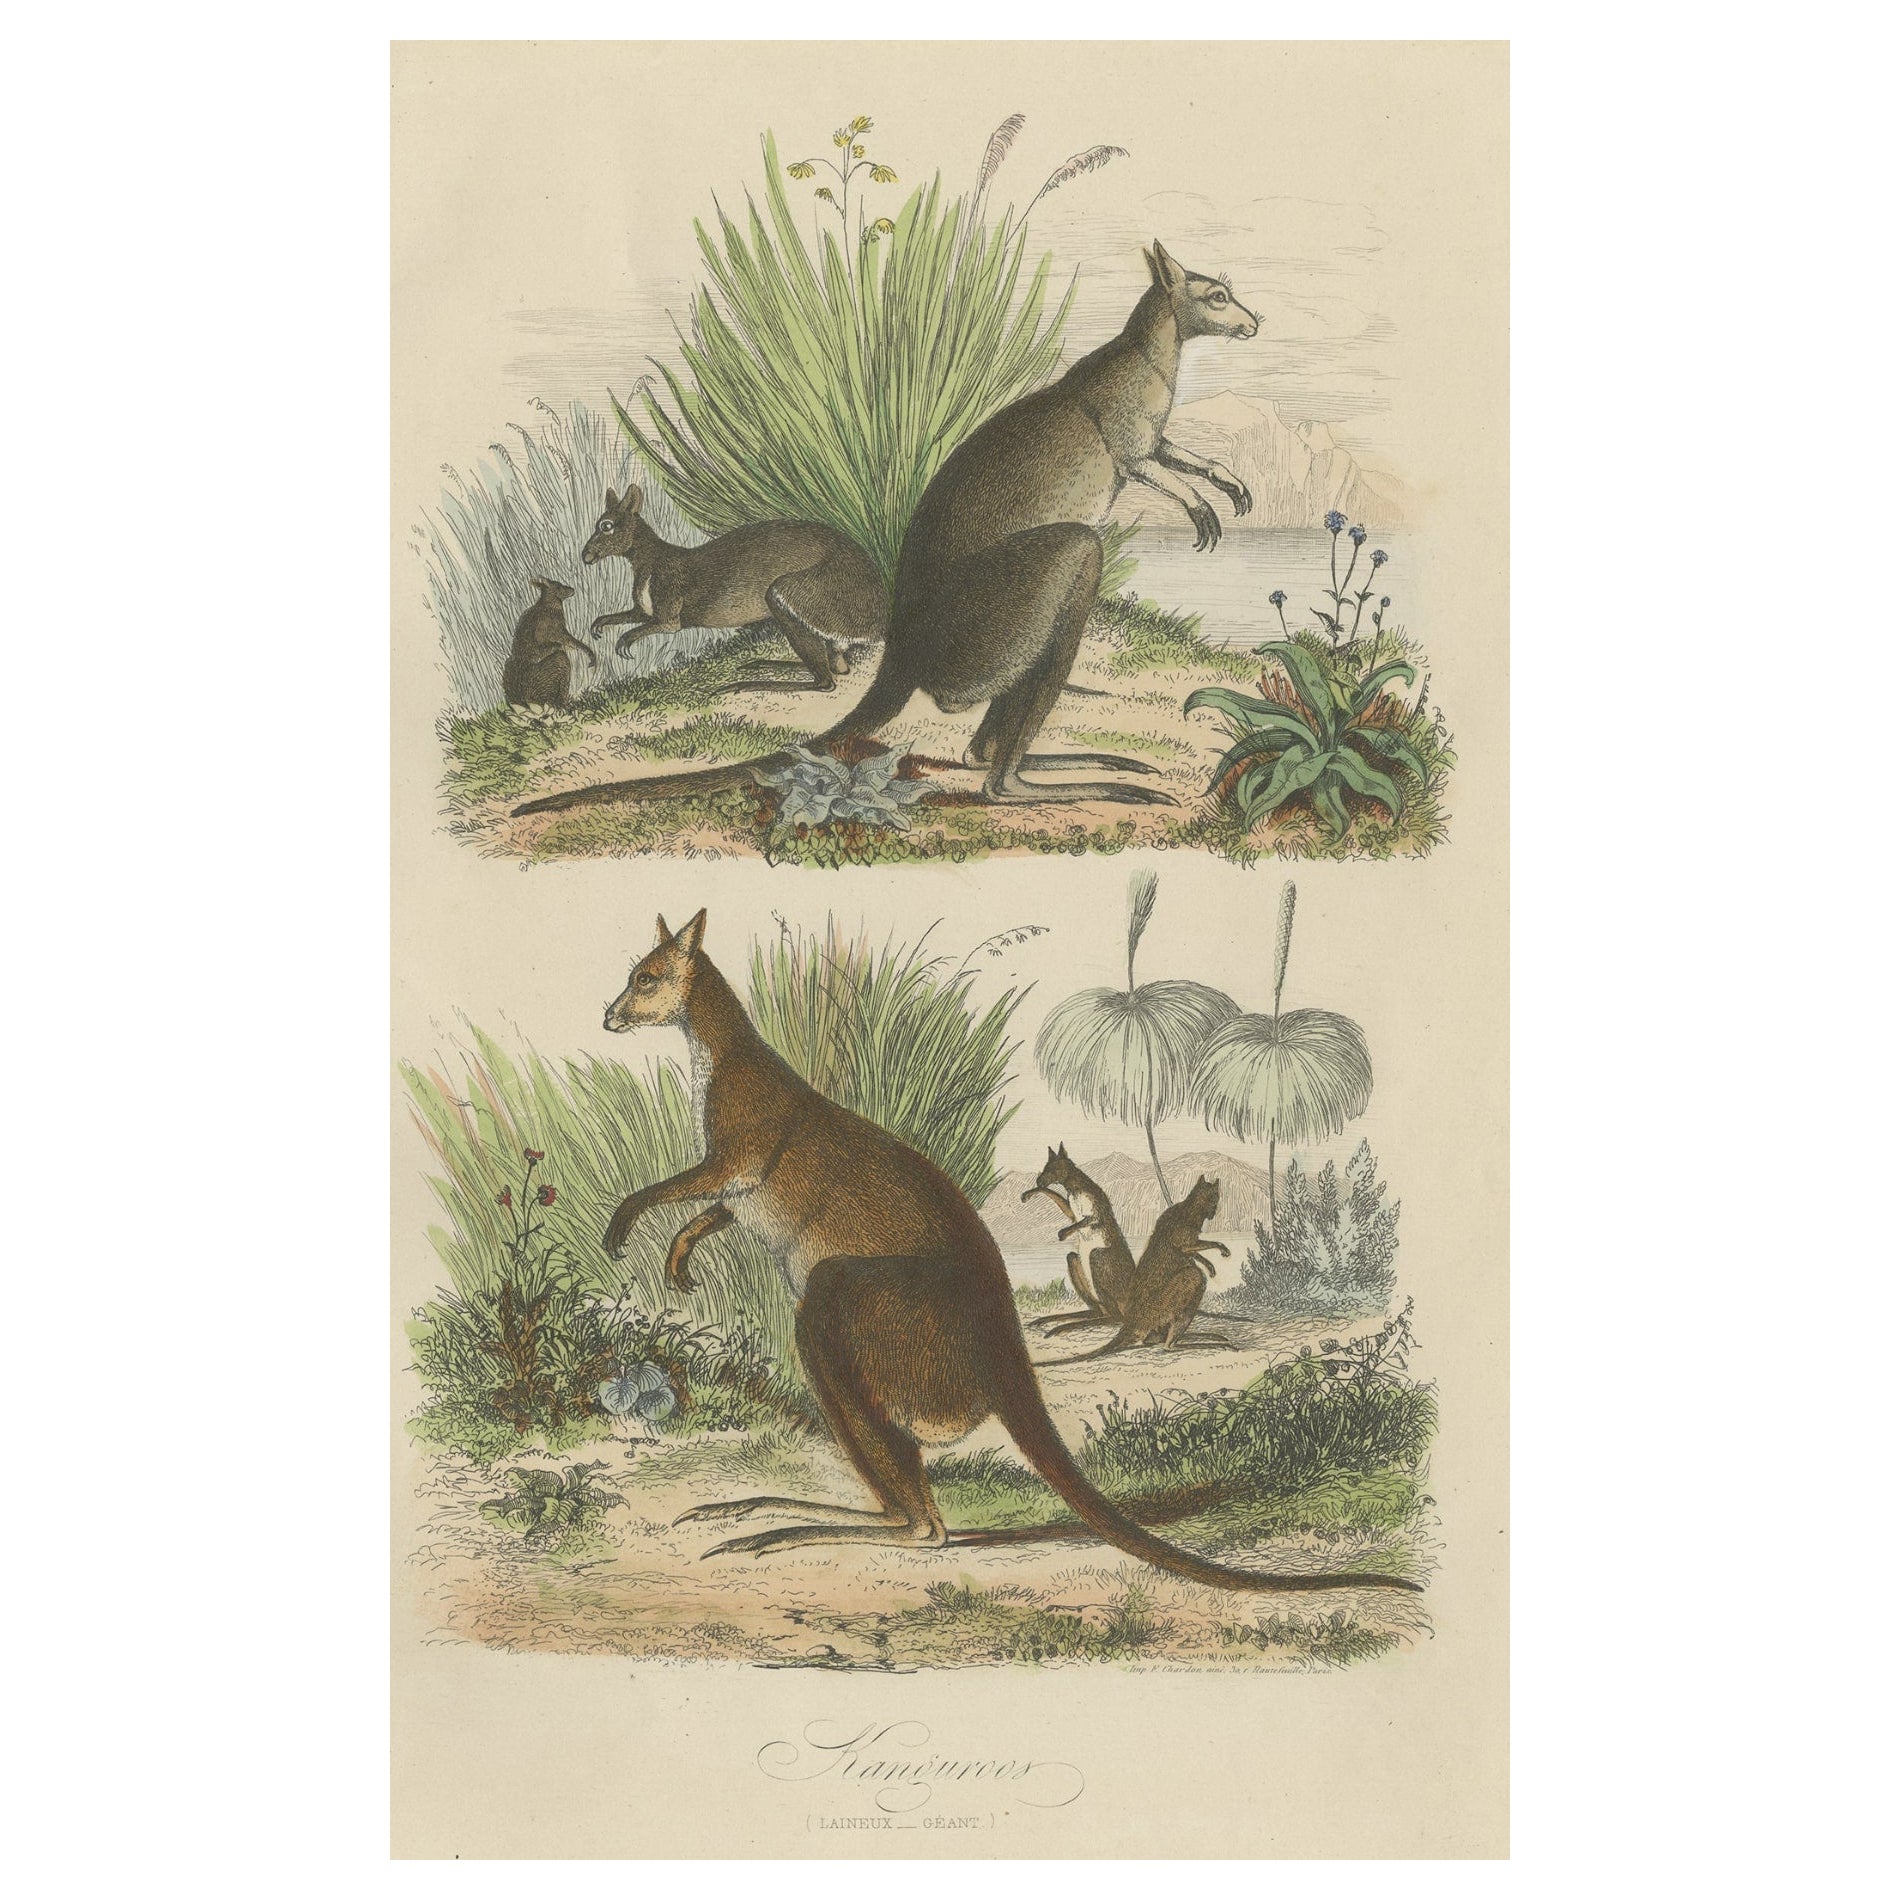 Decorative Antique Handcolored Print of Two Kangaroos in Australia, 1854